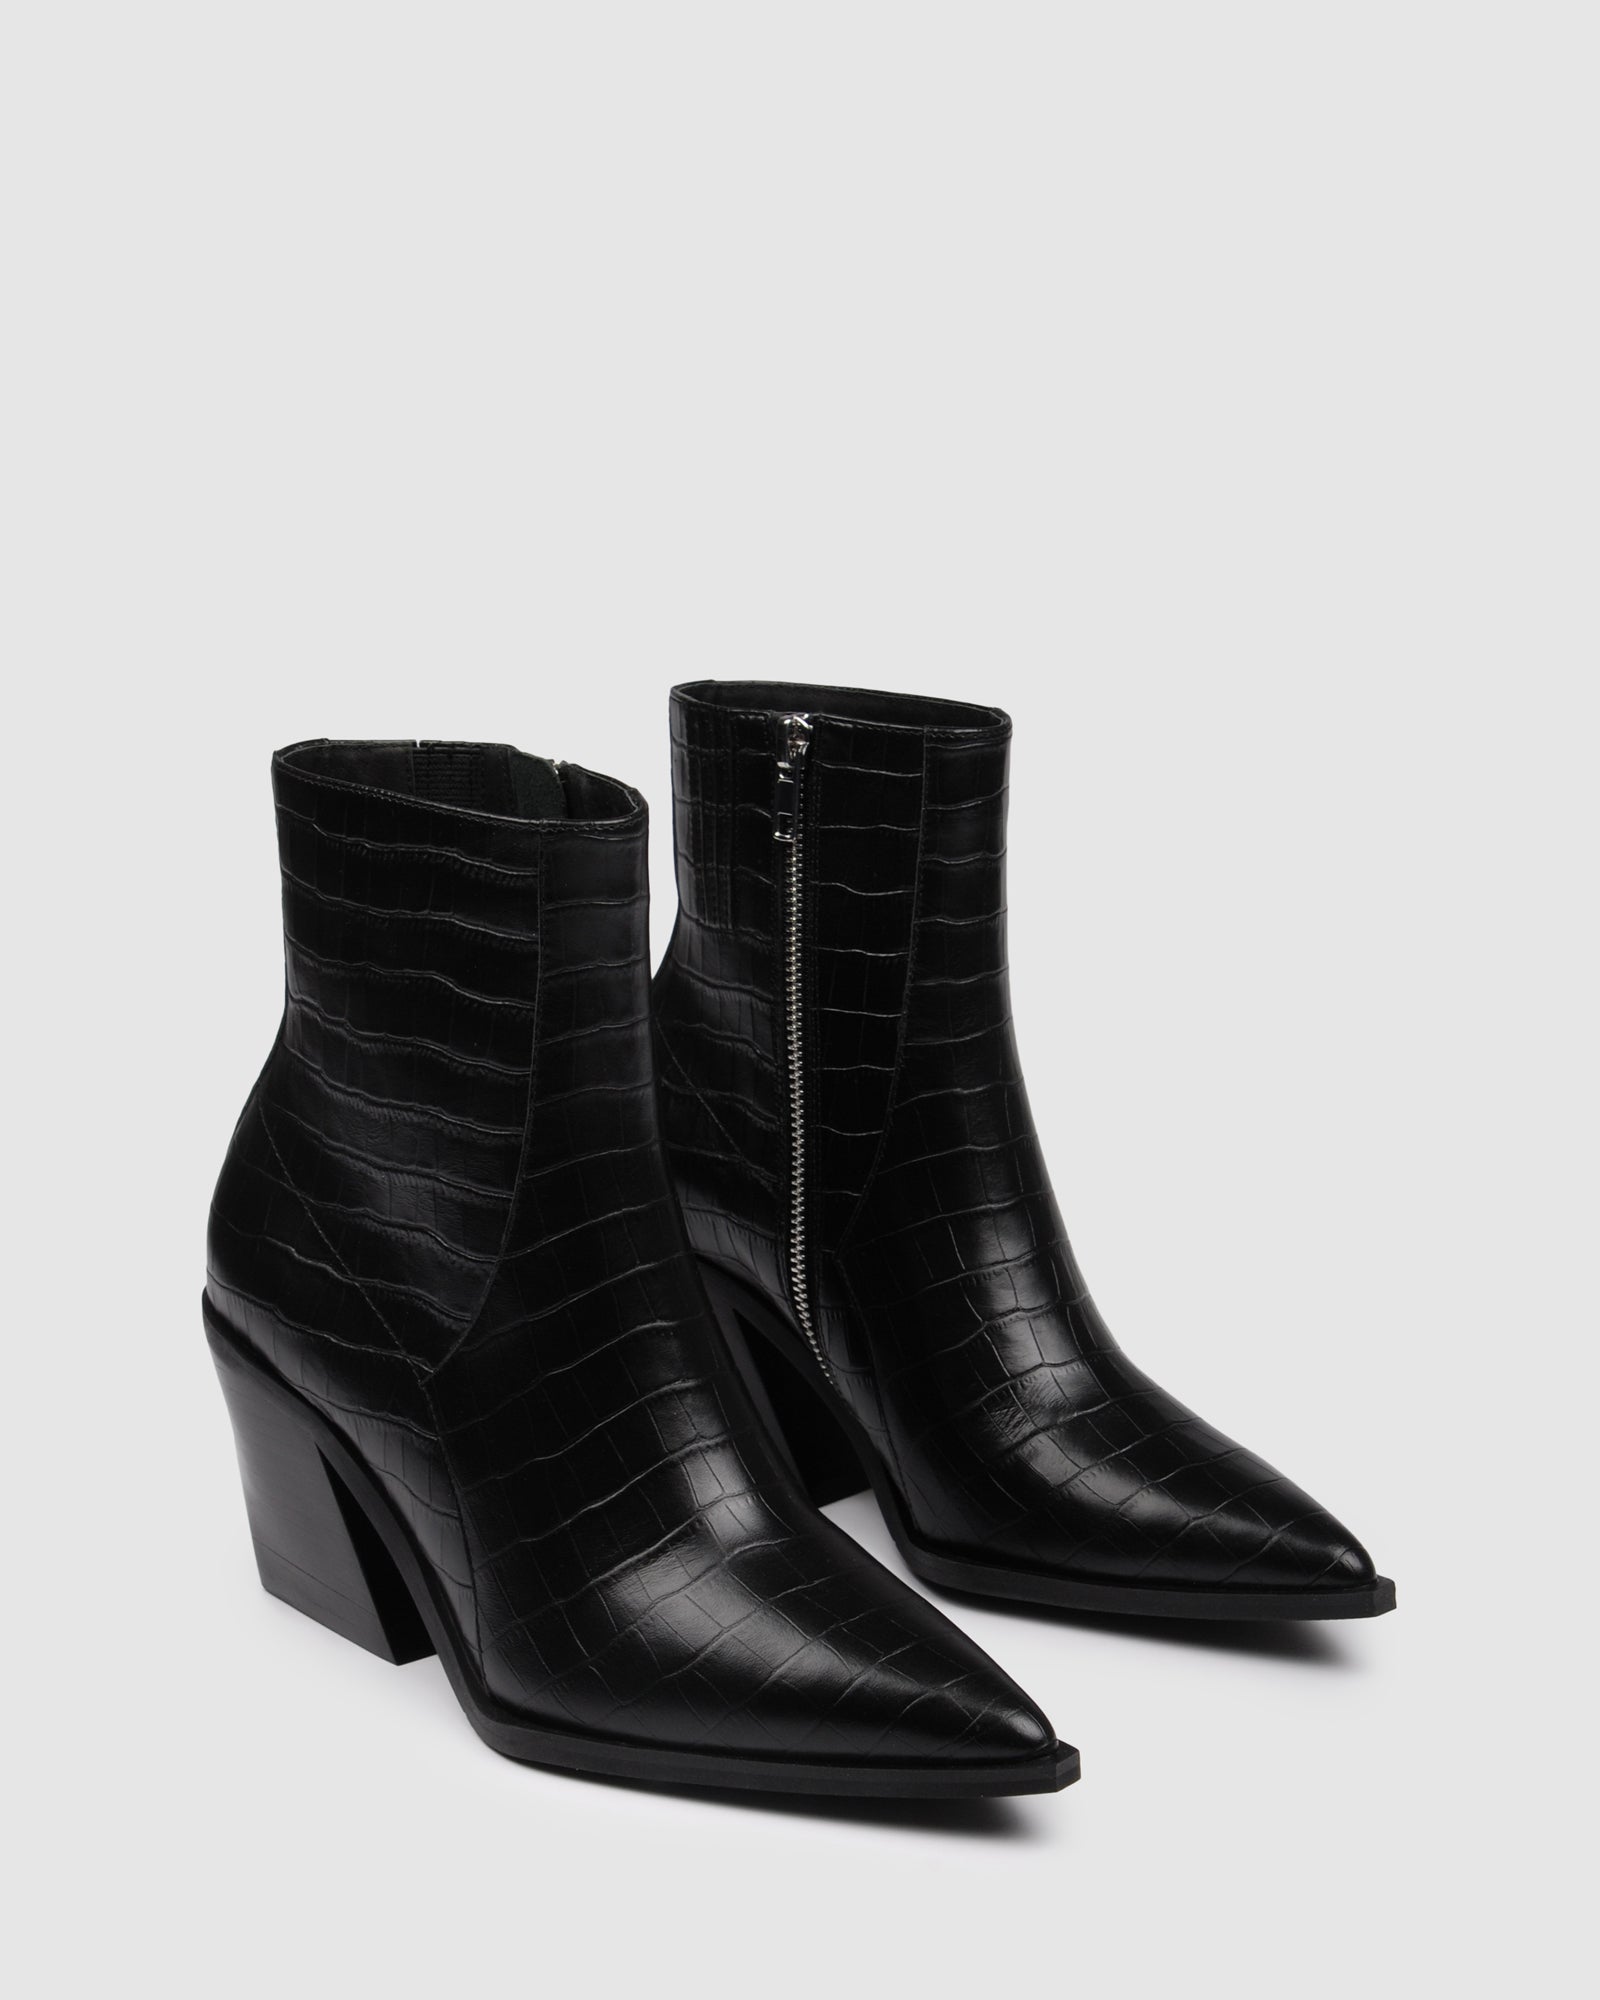 joanne mercer boots